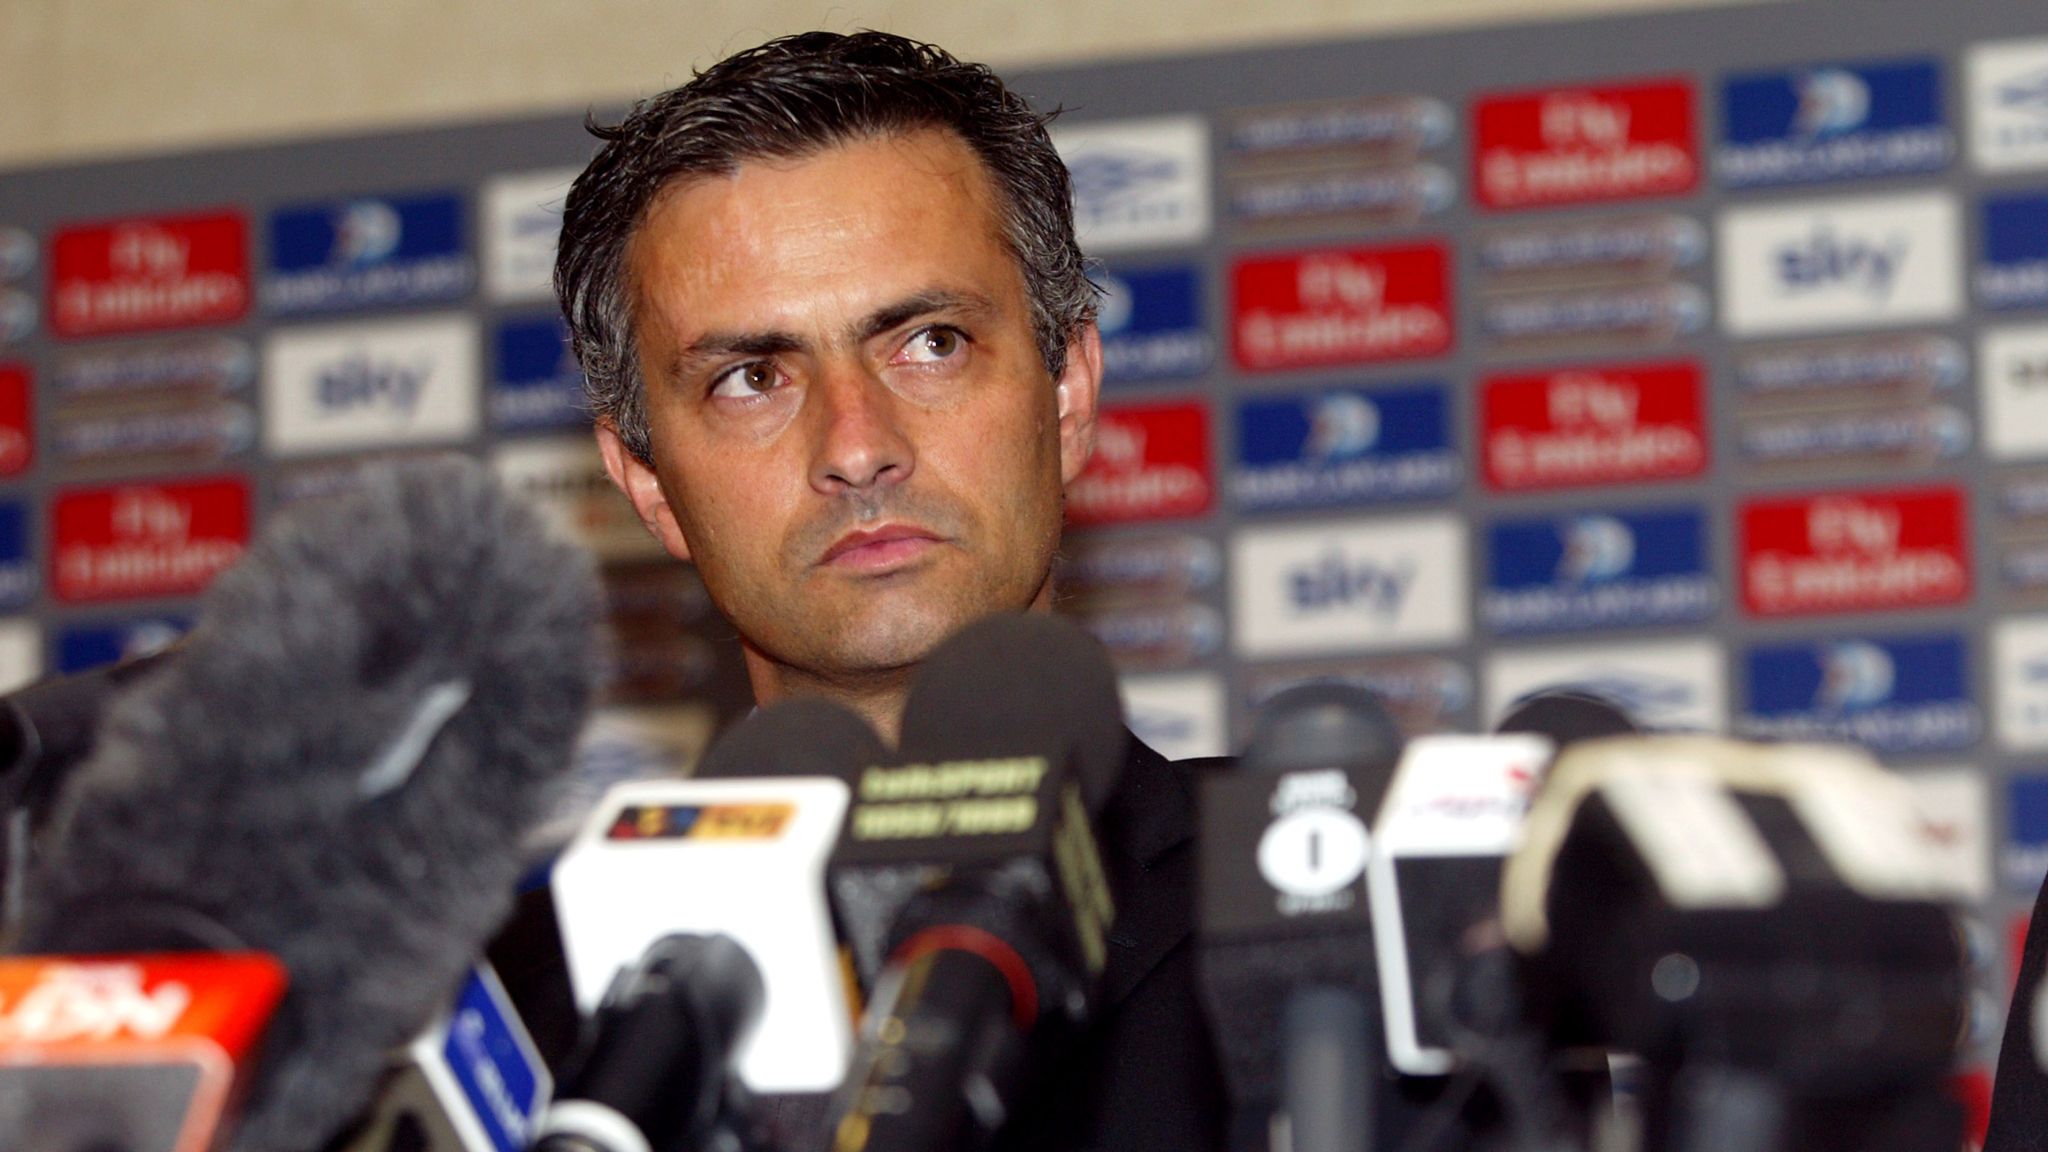 Will Jose Mourinho be the 'Special One' for Man Utd? | Football News | Sky Sports